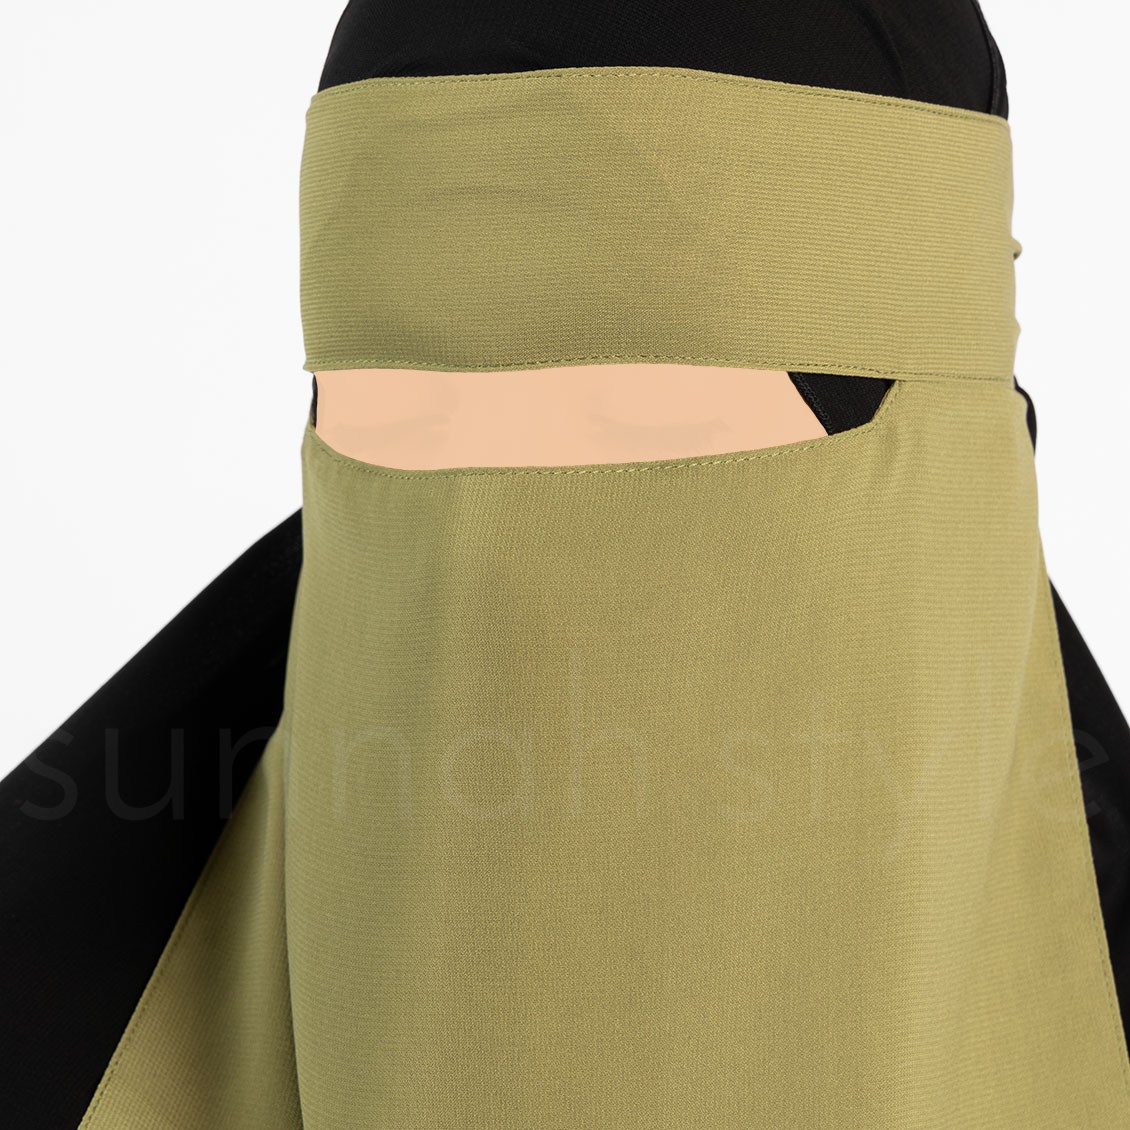 Narrow No-Pinch Two Layer Niqab